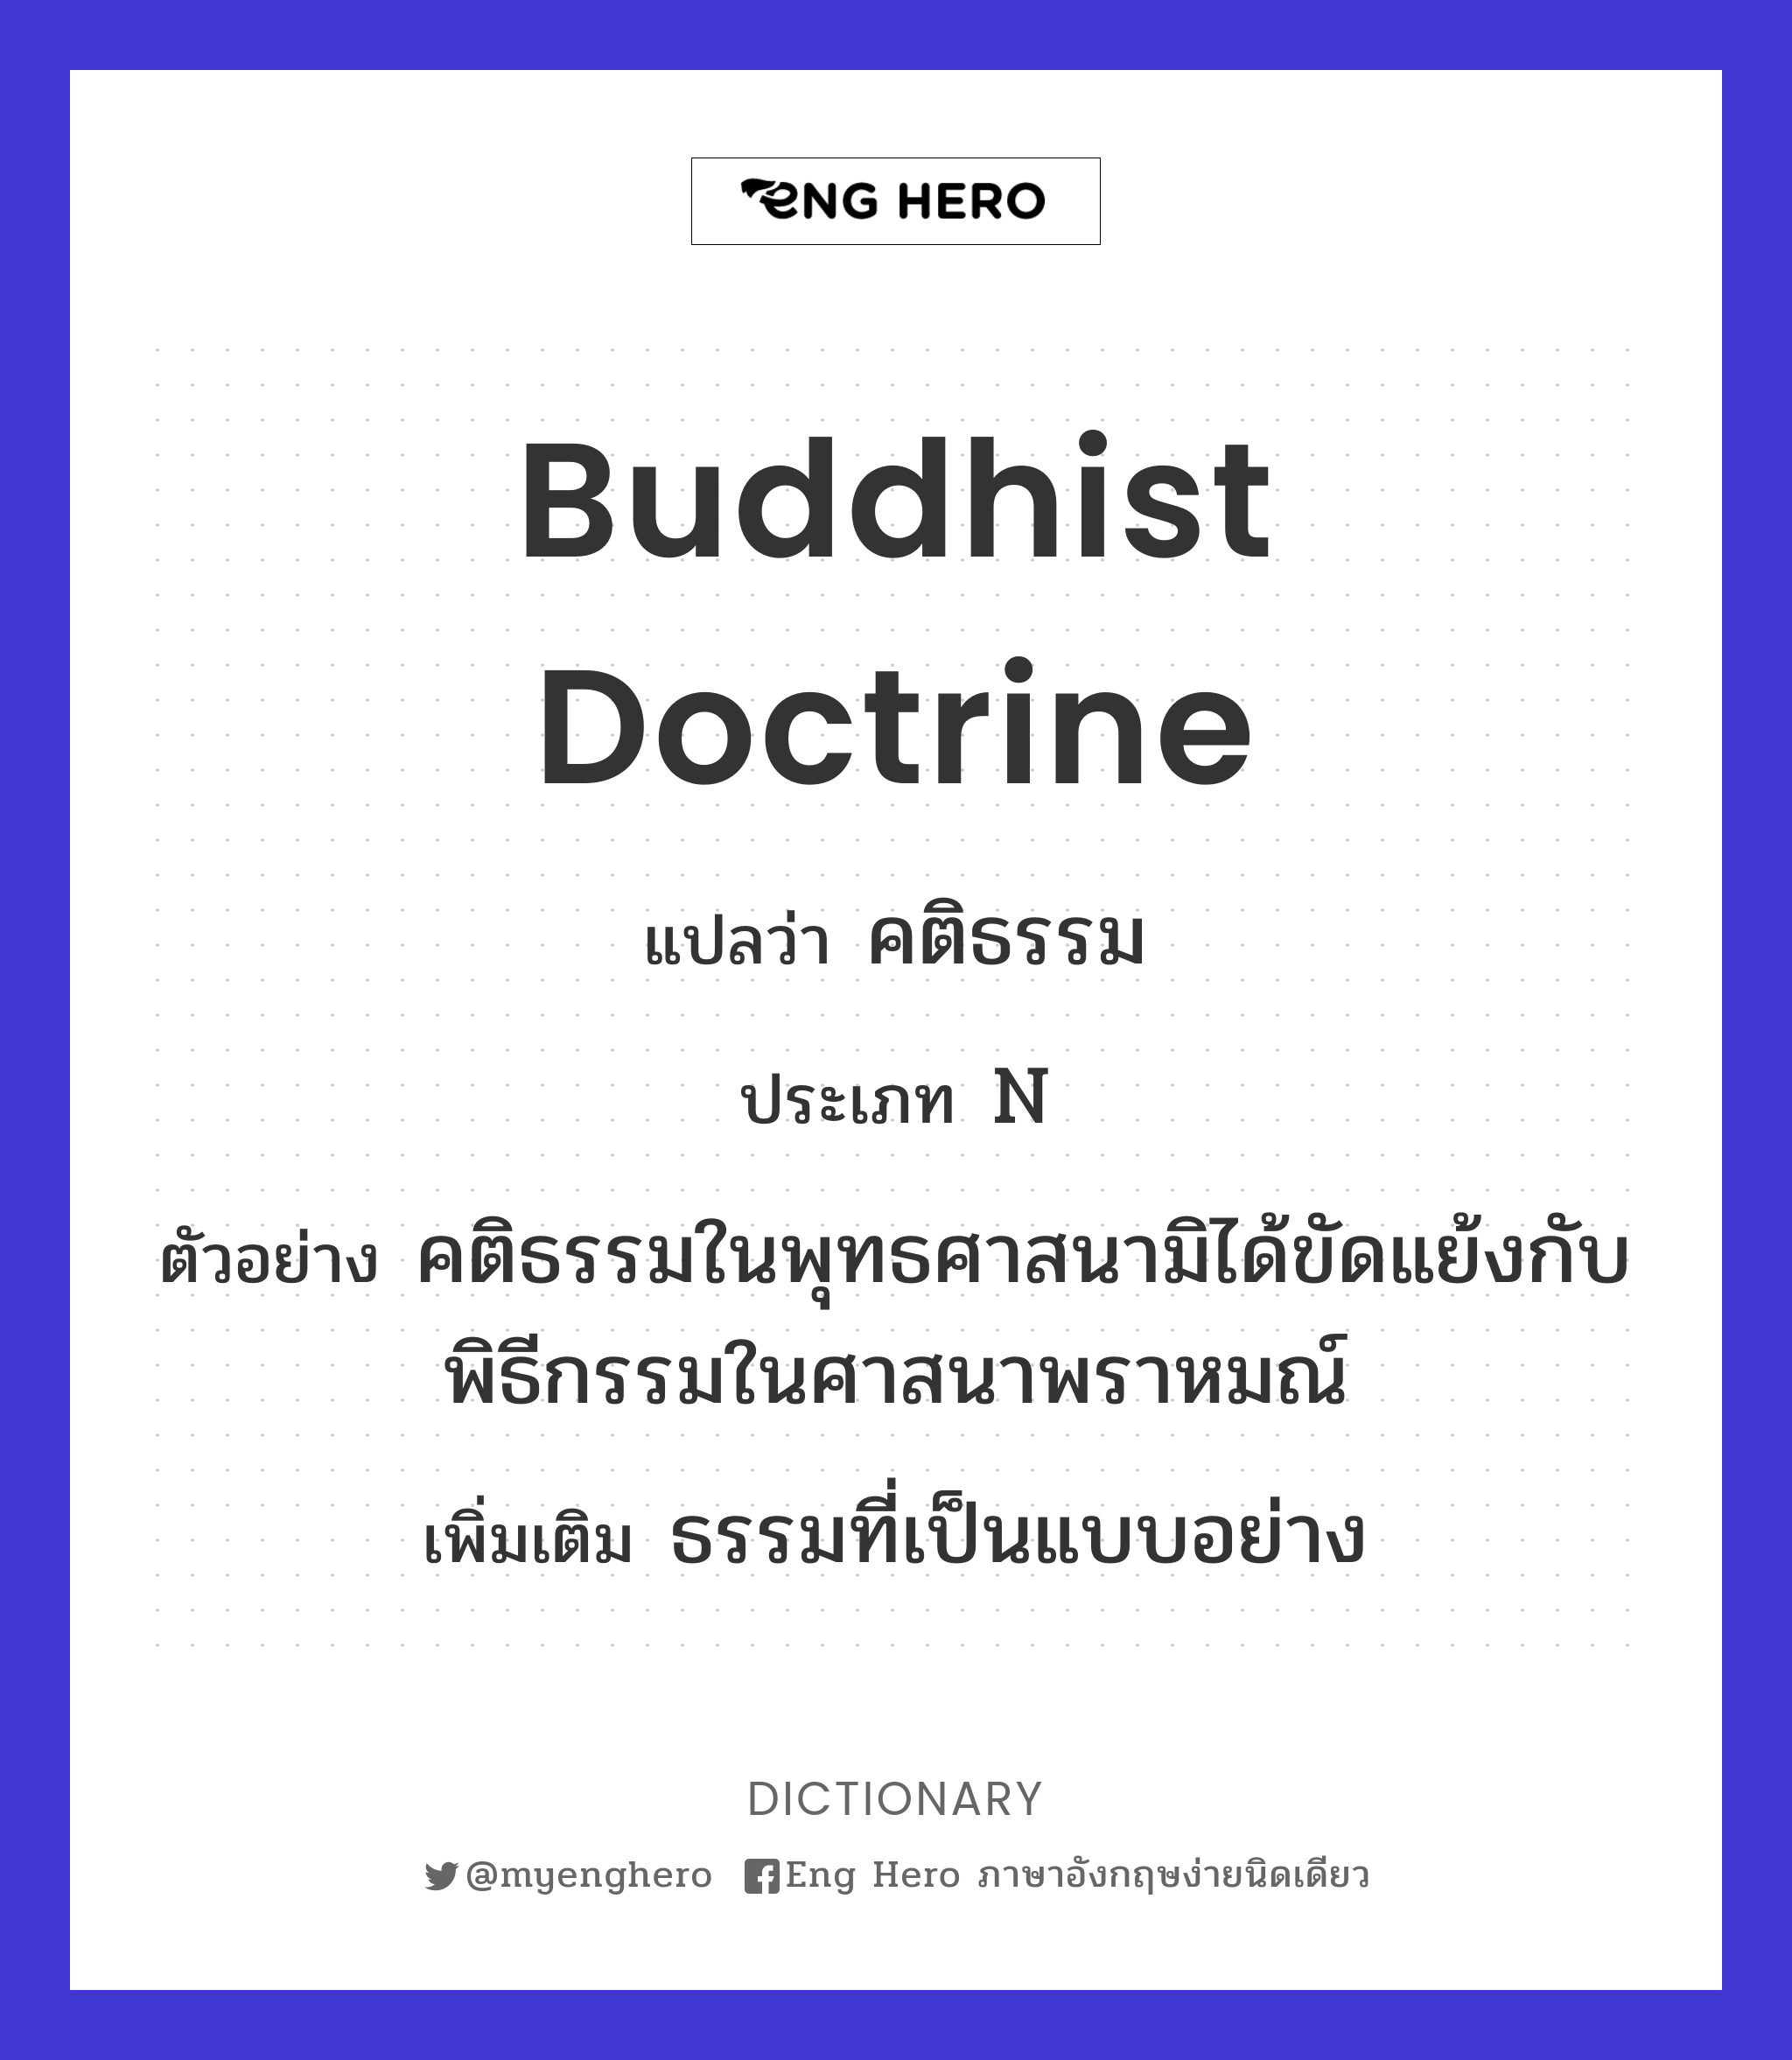 Buddhist doctrine